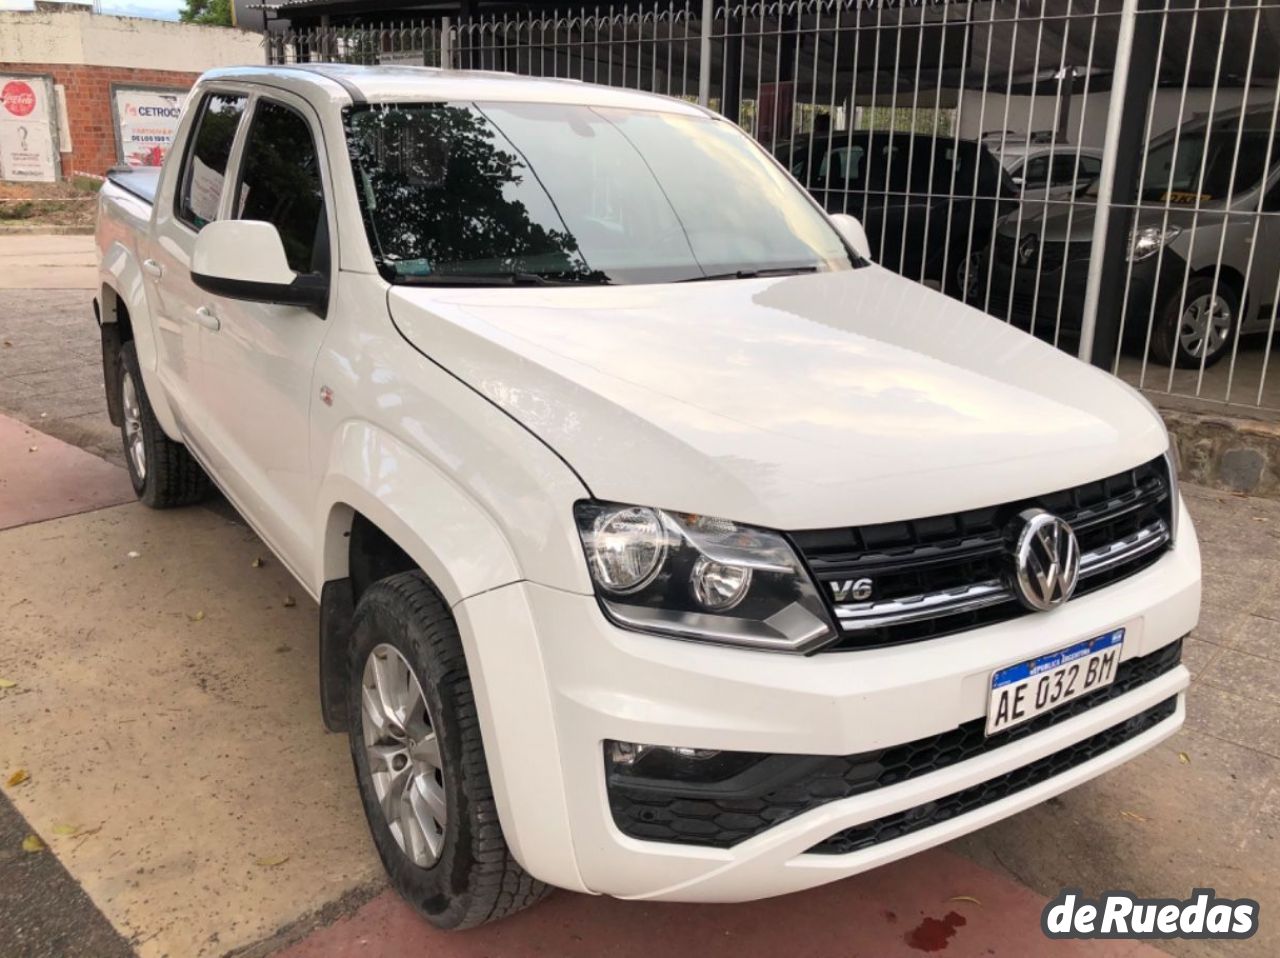 Volkswagen Amarok Usada en Salta, deRuedas